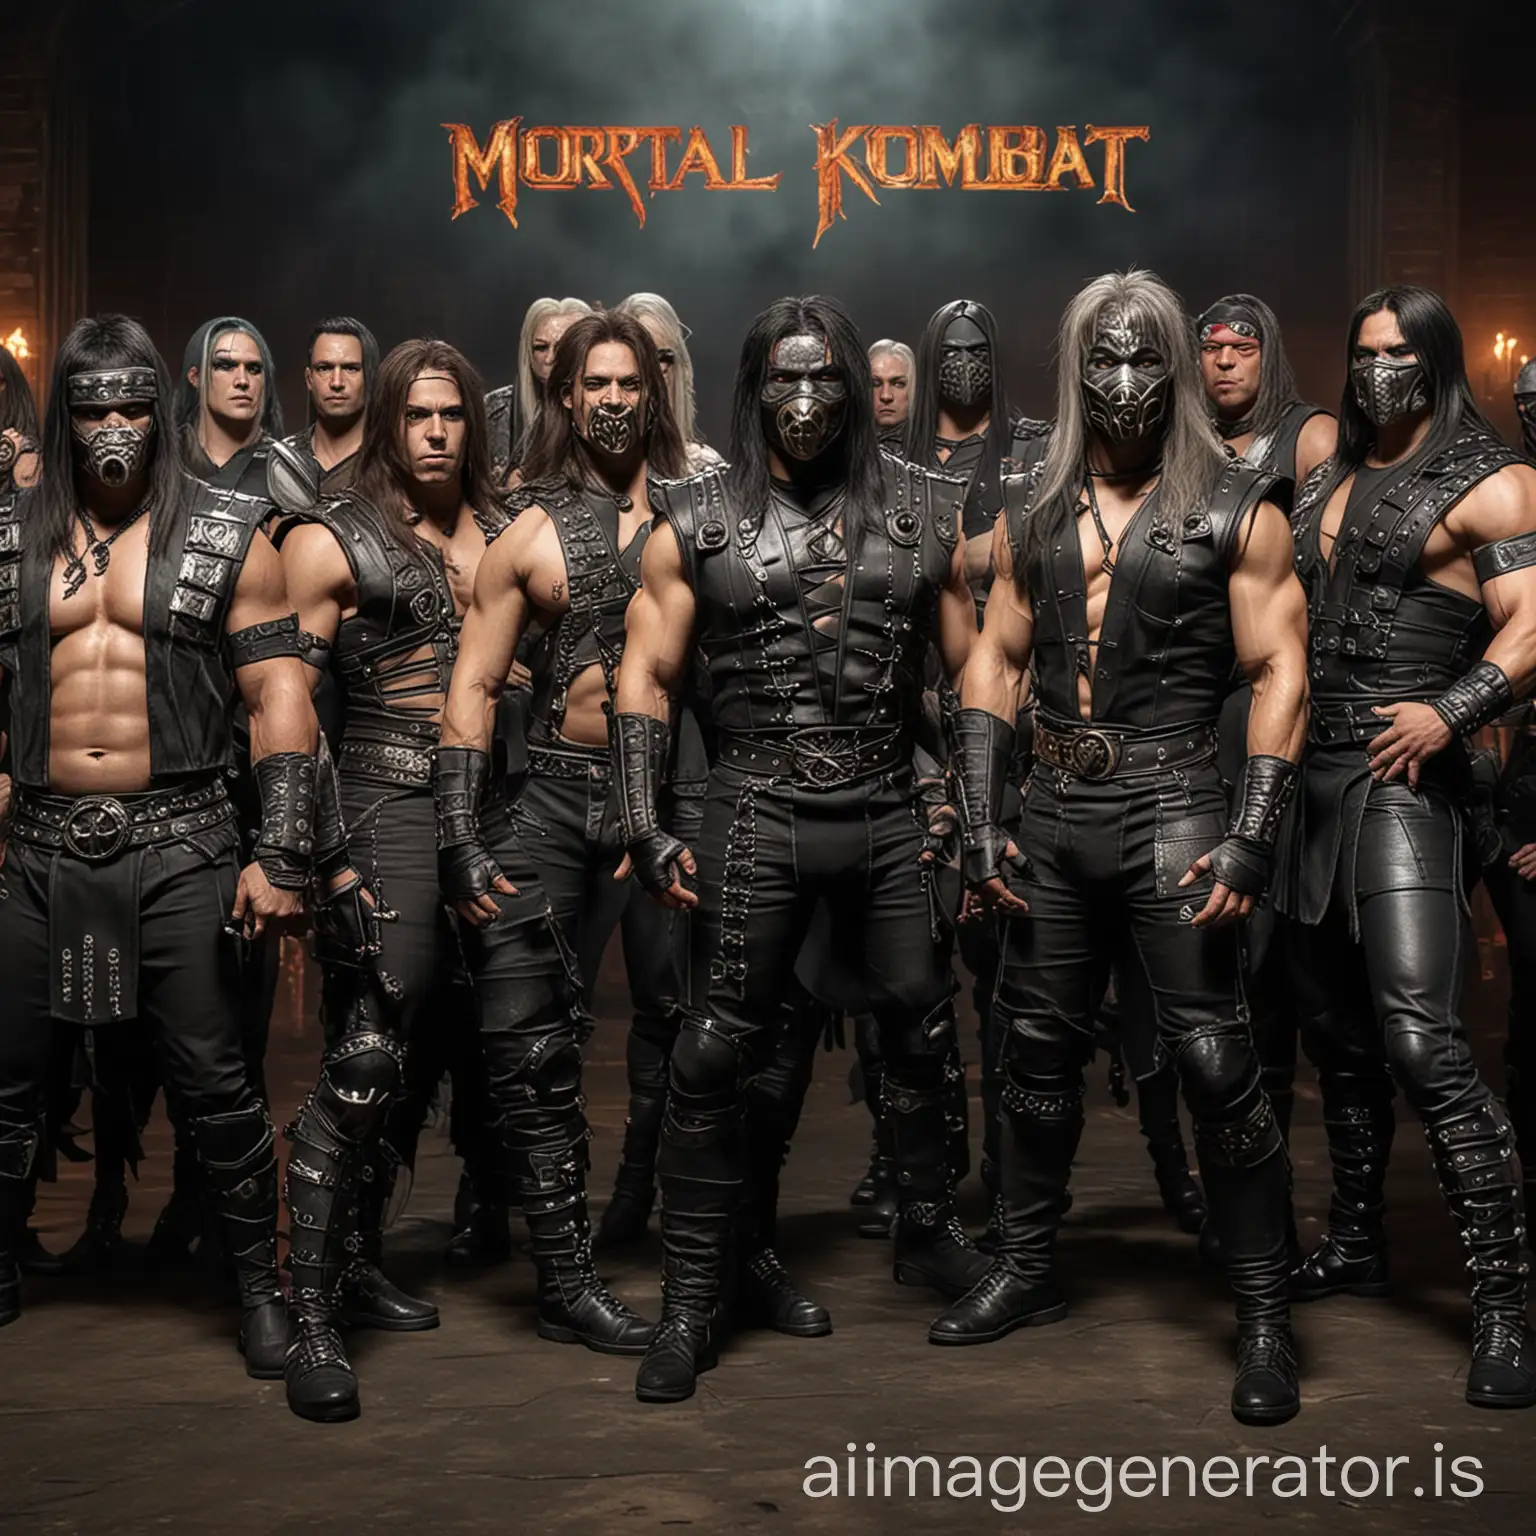 mortal kombat banda de rock y heavy metal with lgbt dressed audience